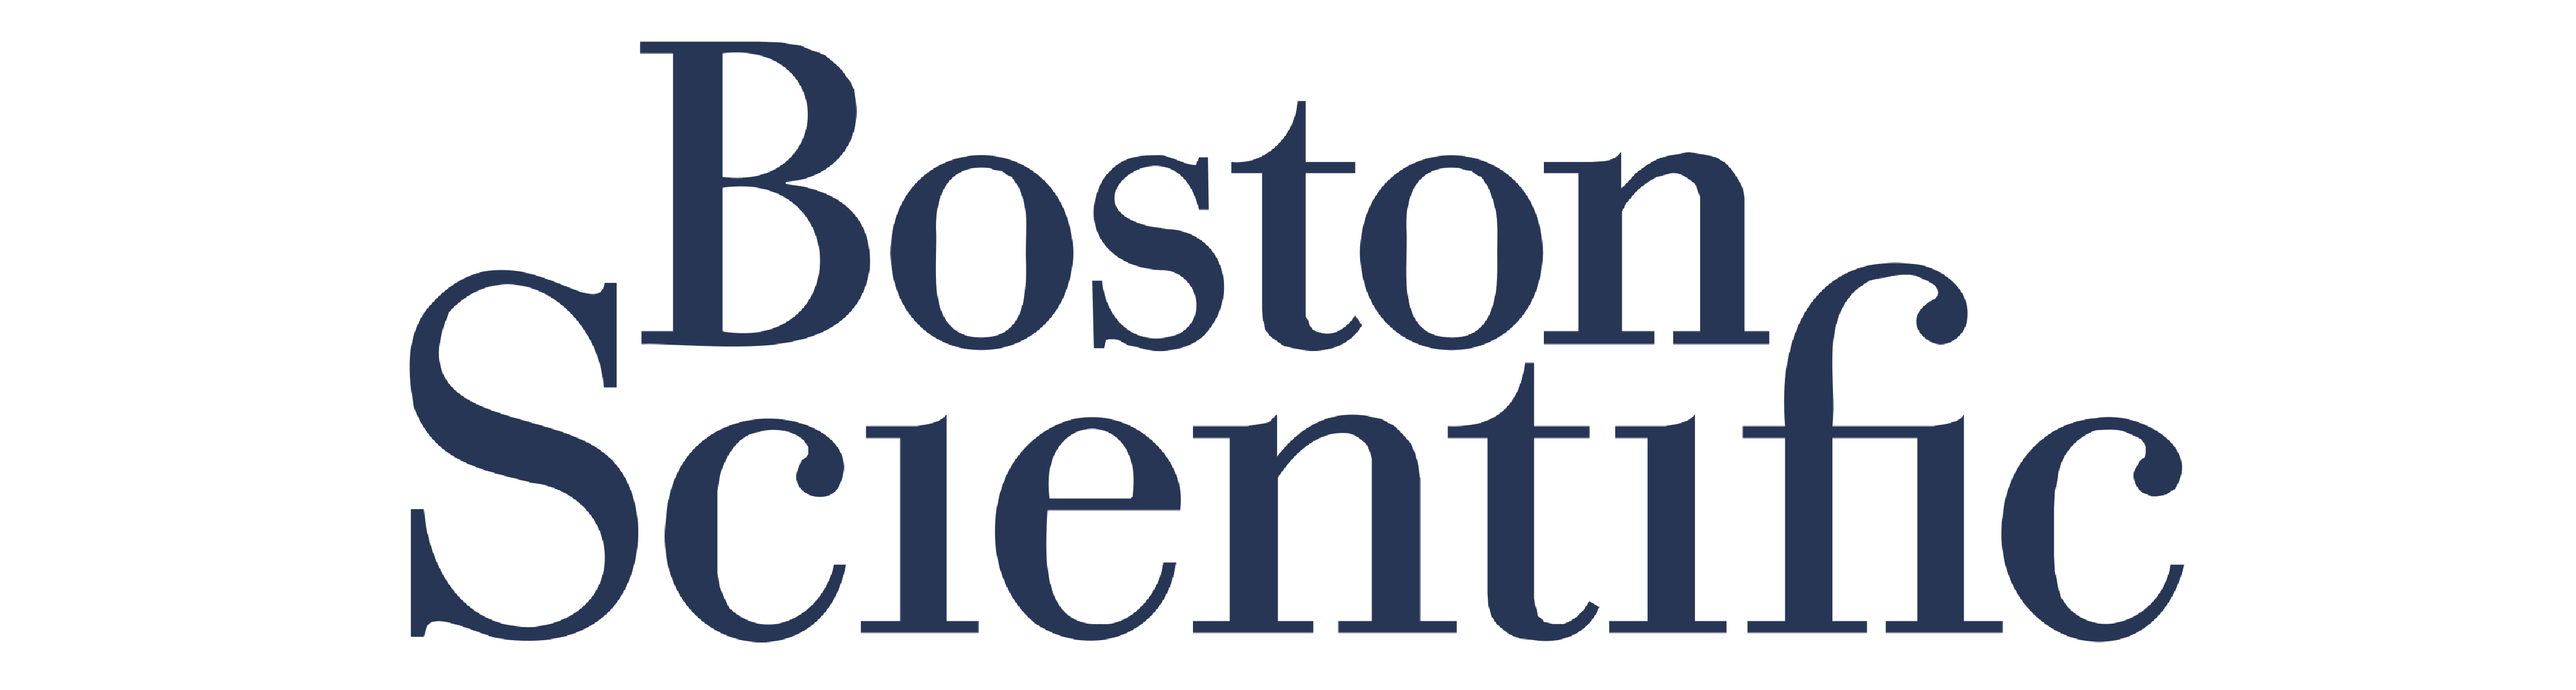 Boston Cientific png